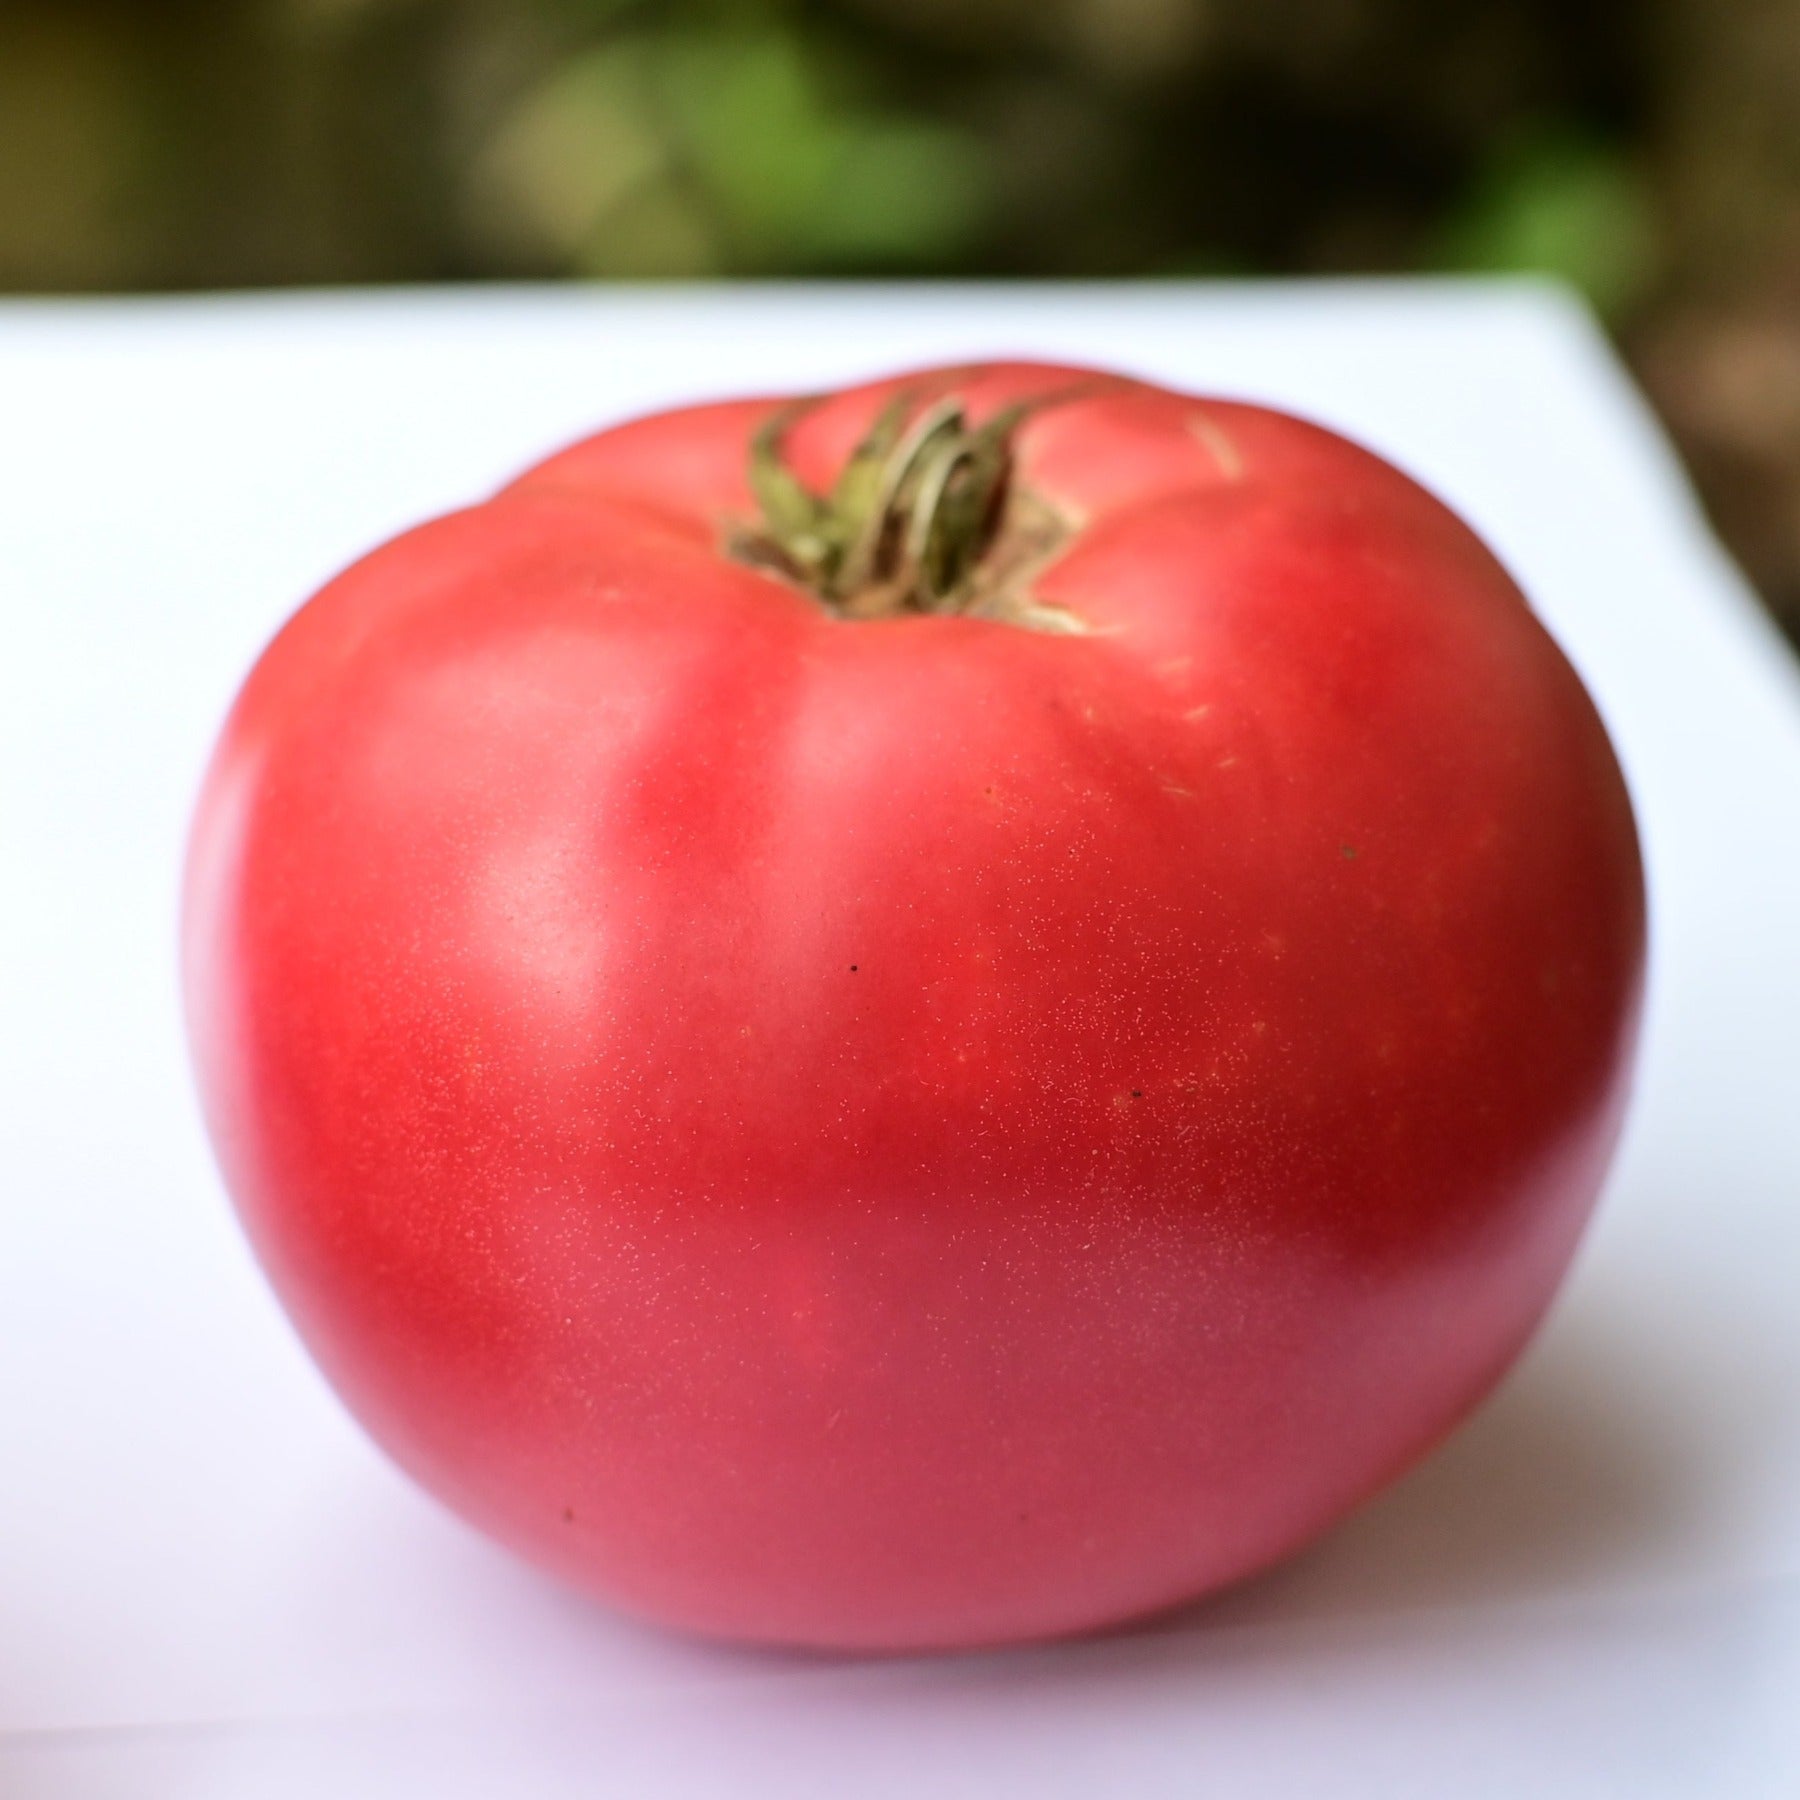 A Santa Rossa pink slicer tomato against a white background